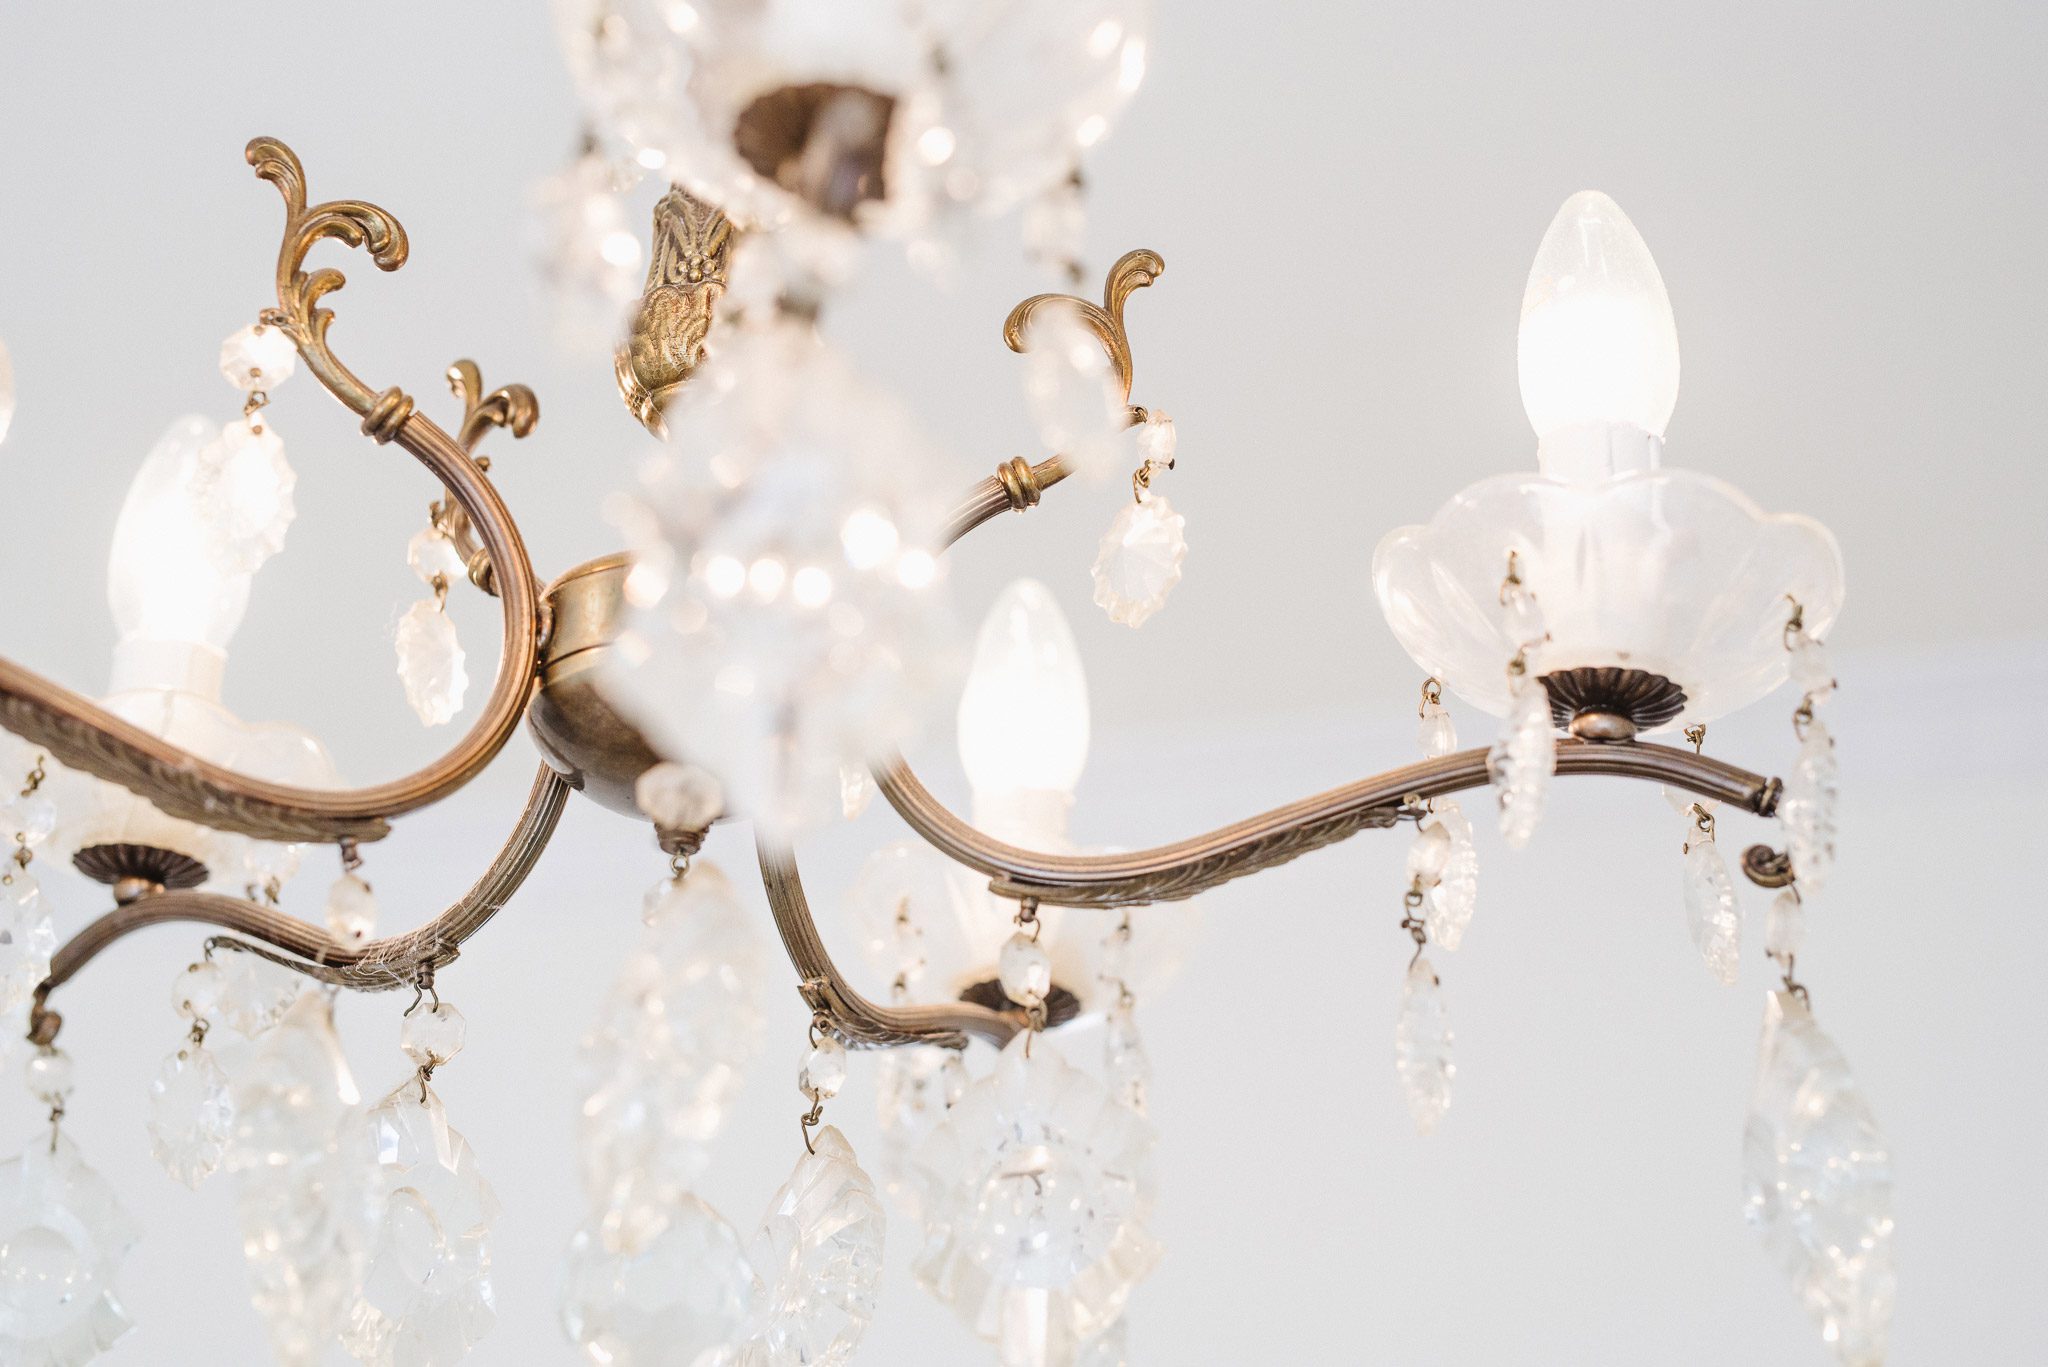 chandelier from the boudoir studio